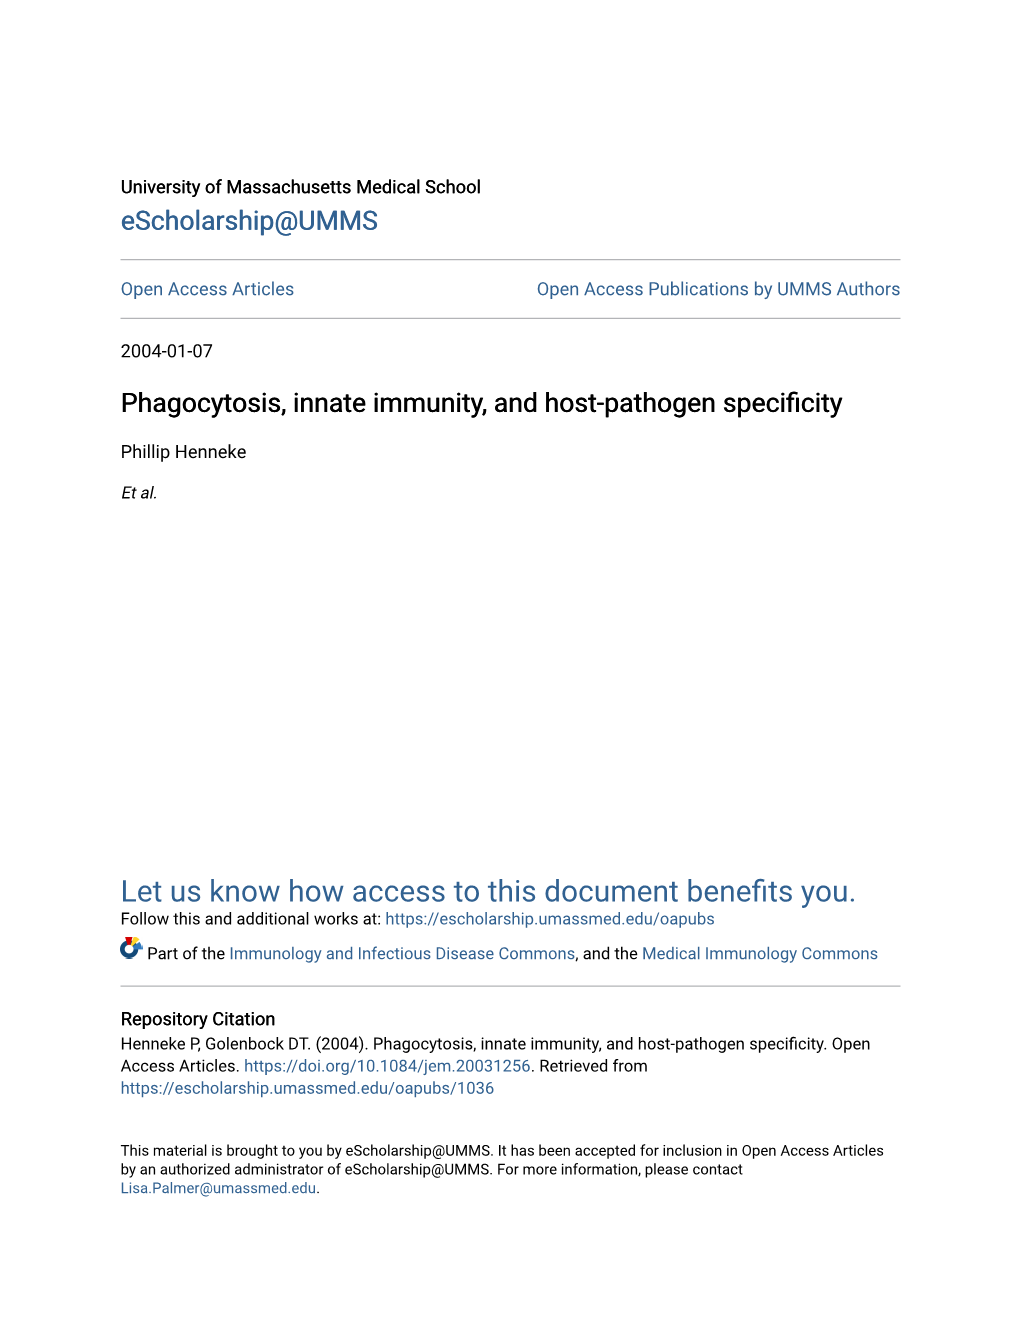 Phagocytosis, Innate Immunity, and Host-Pathogen Specificity